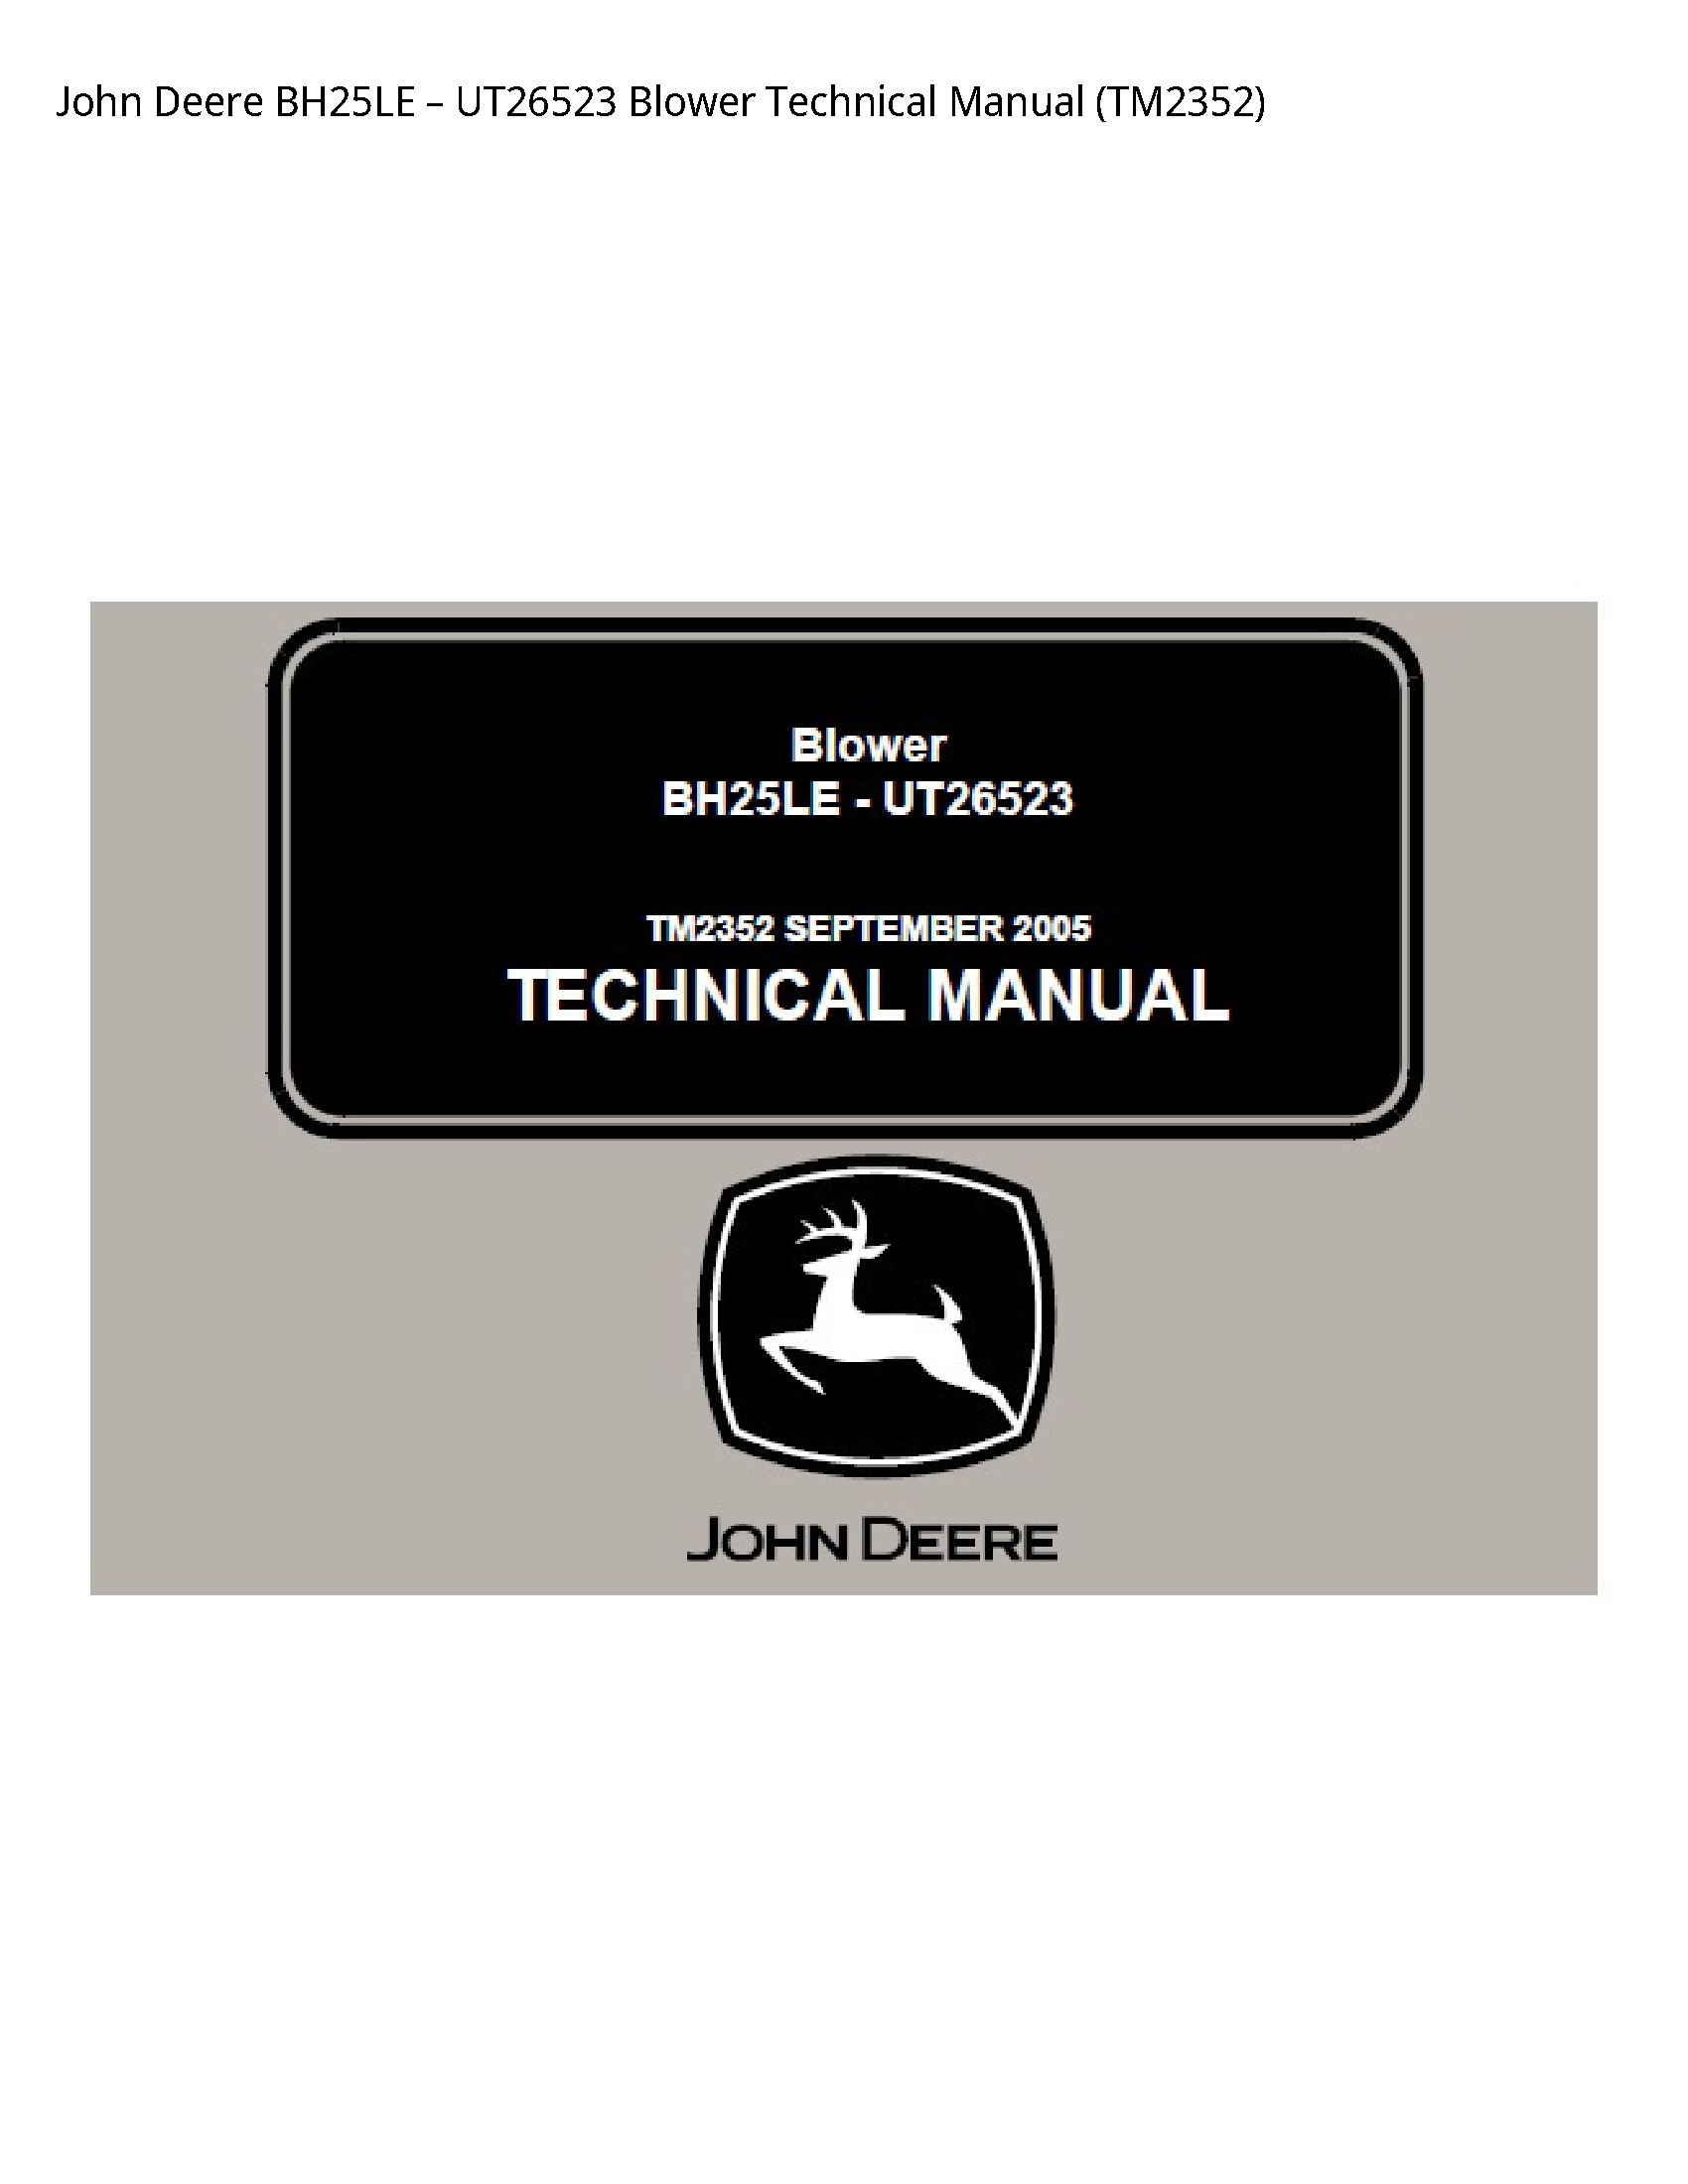 John Deere BH25LE вЂ“ UT26523 Blower Technical Manual - TM2352